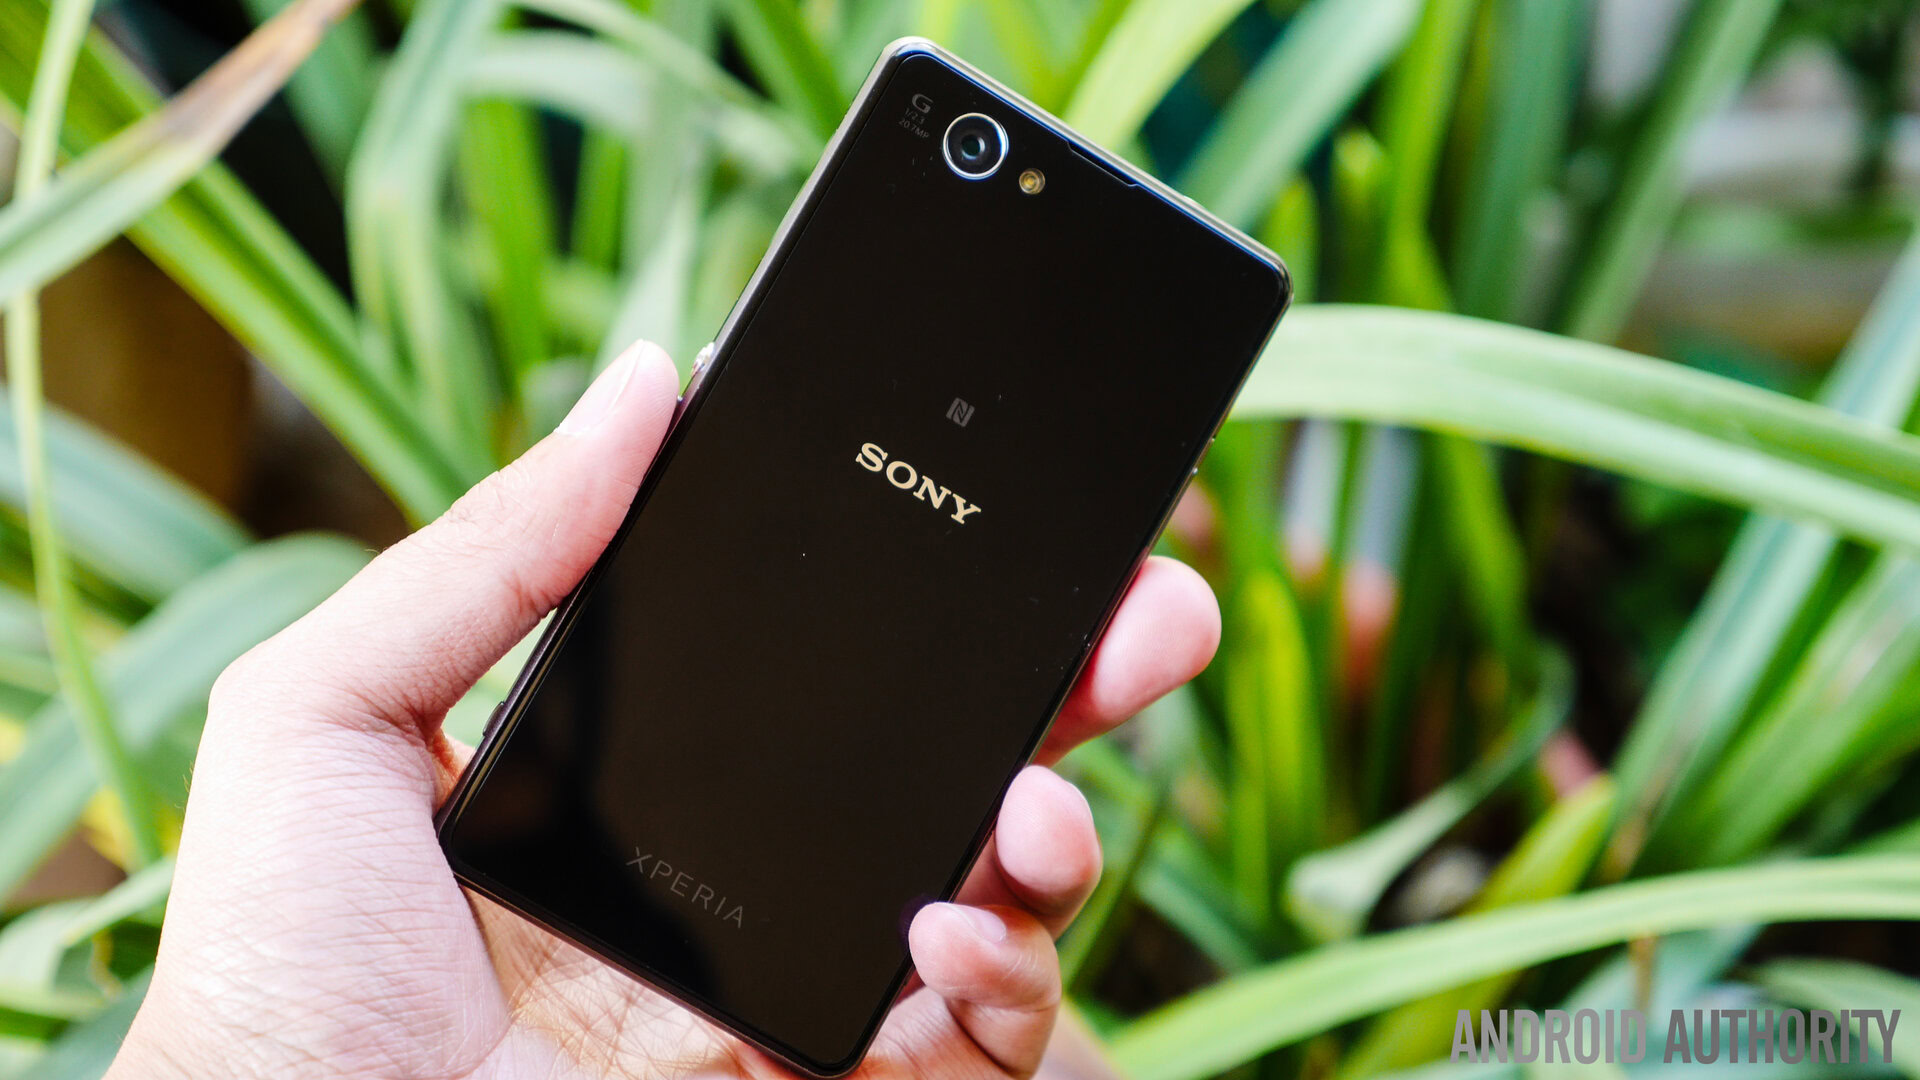 Raap bladeren op voordeel Kudde Sony Xperia Z1 Compact Review - Android Authority